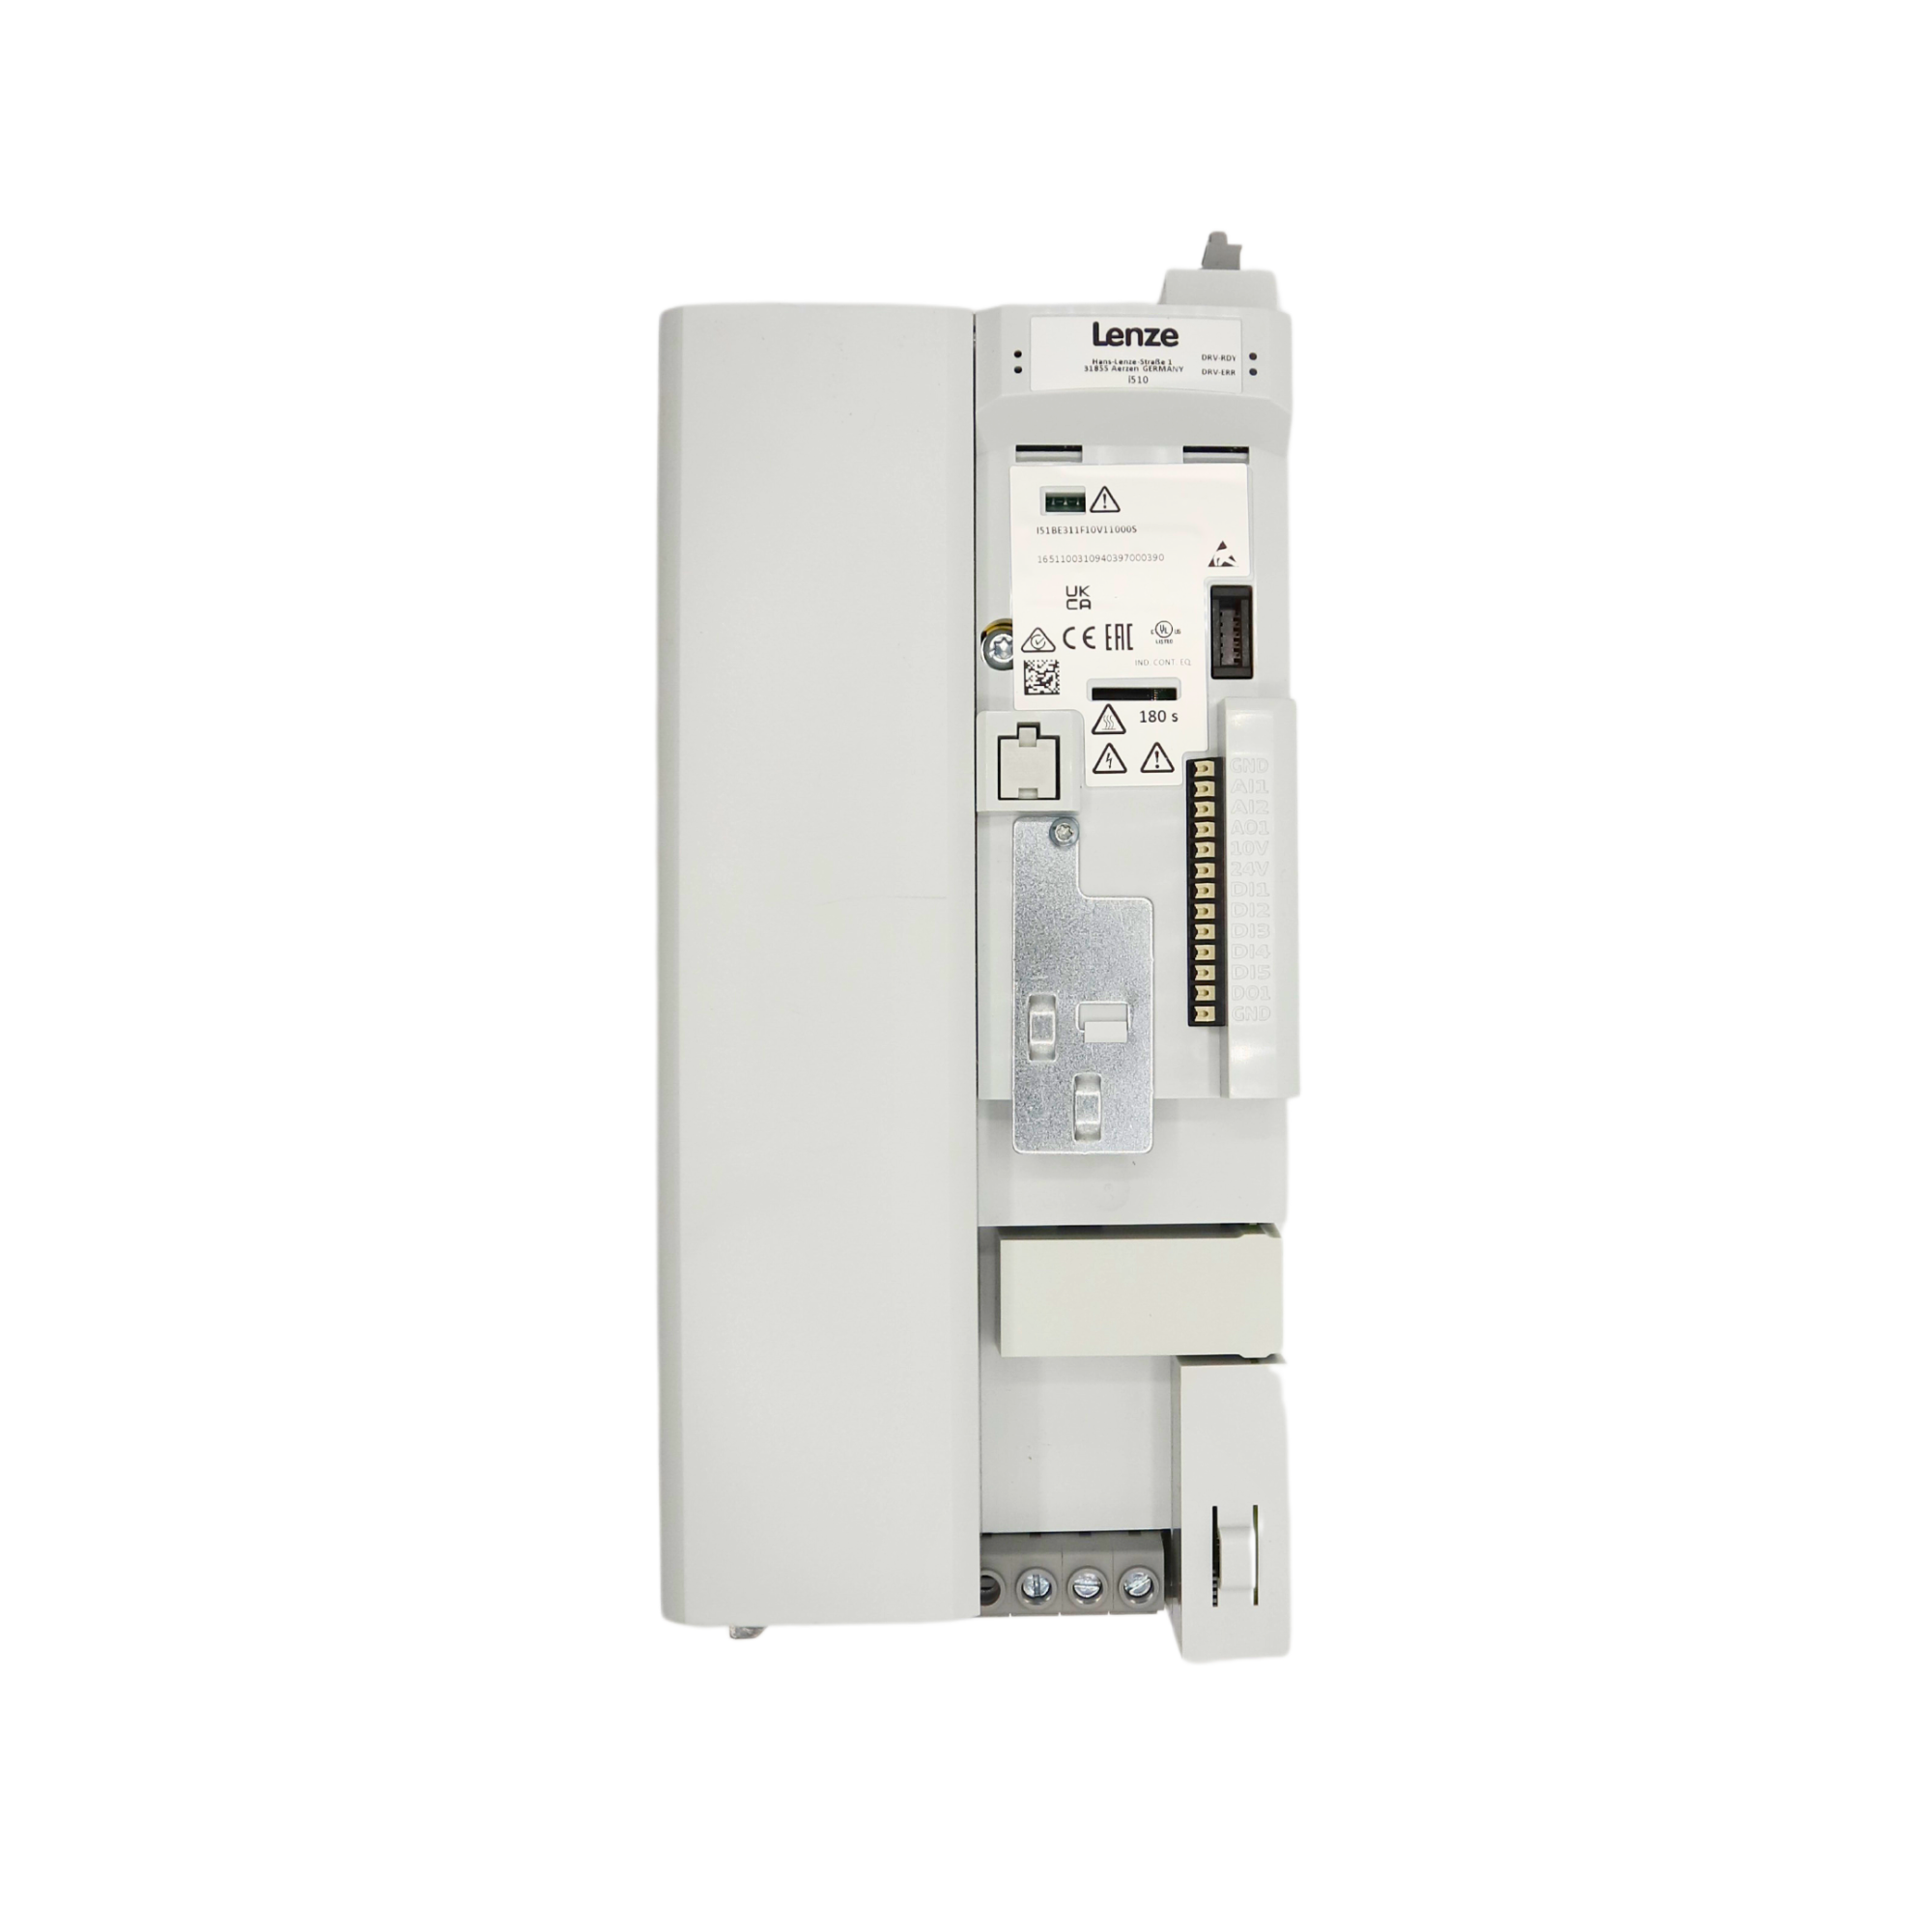 Lenze | i510 15hp Cabinet mount 480volt 5digital inputs, 2 analog inputs, 1 digital output 1 analog Output, 1 relay | I51BE311F10V11000S - front view